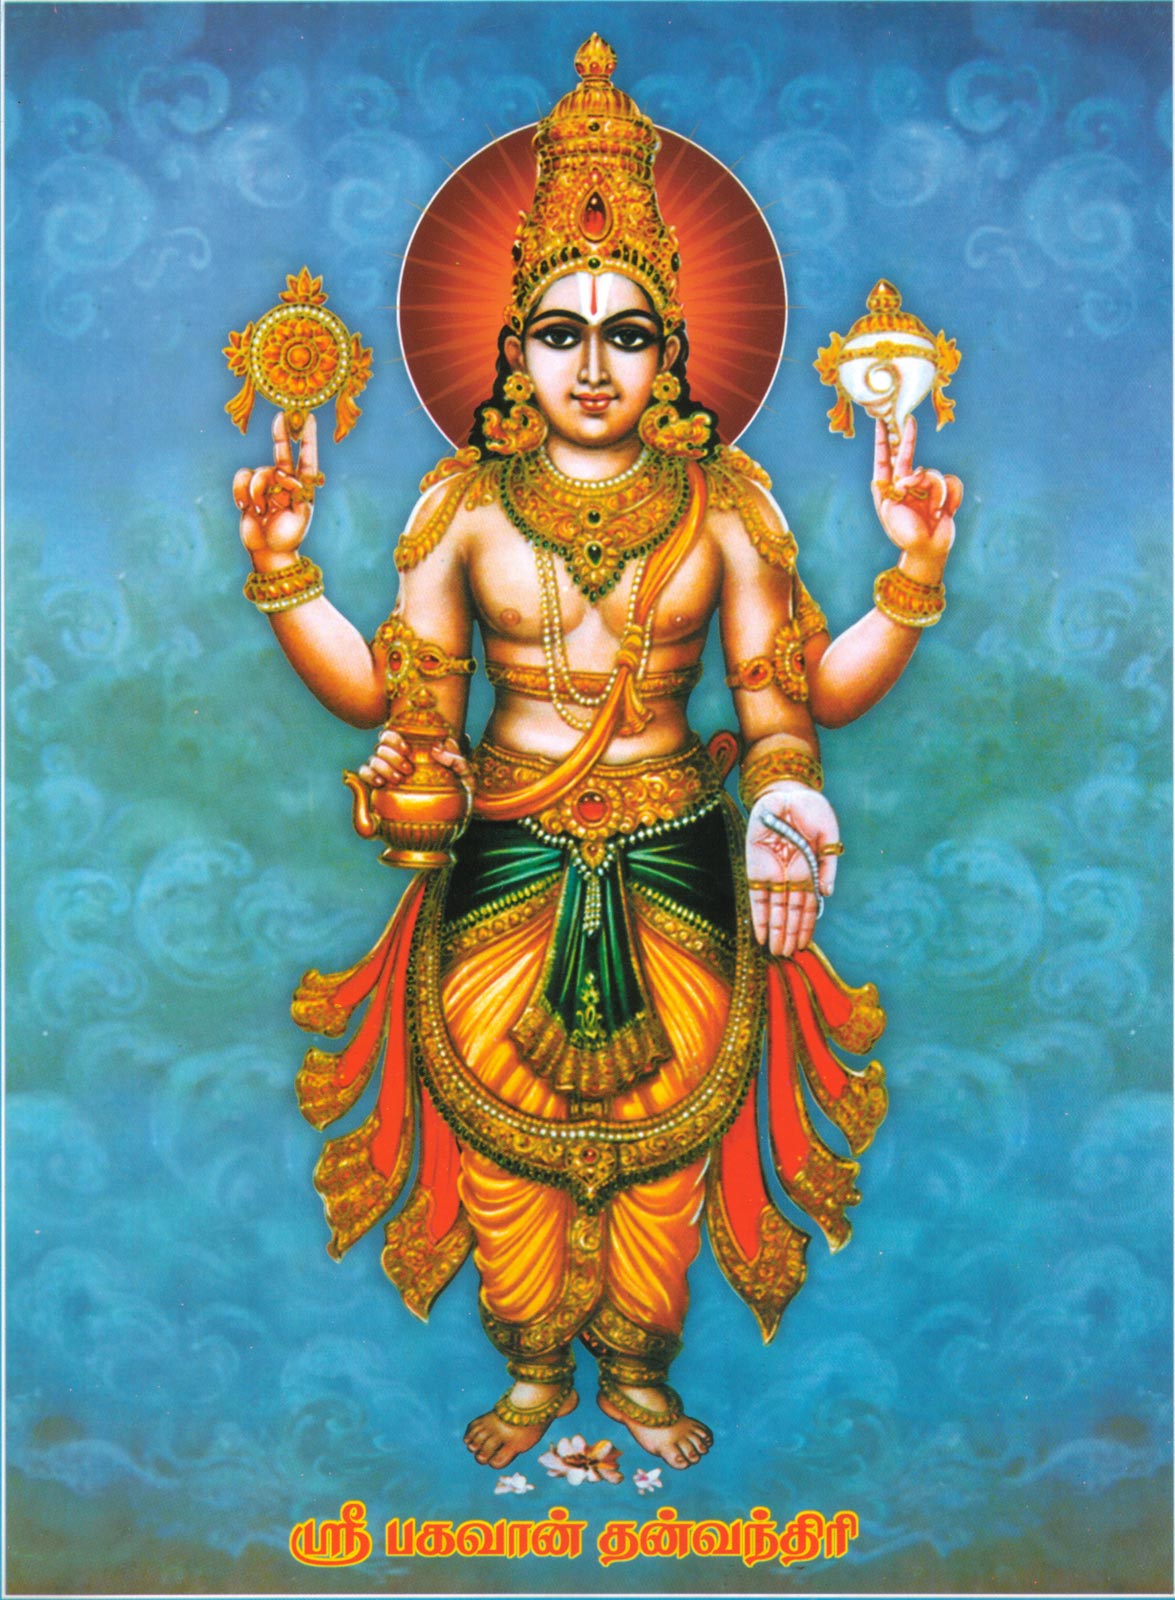 lord vishnu wallpaper hohe auflösung,hindu tempel,guru,mythologie,gemälde,poster